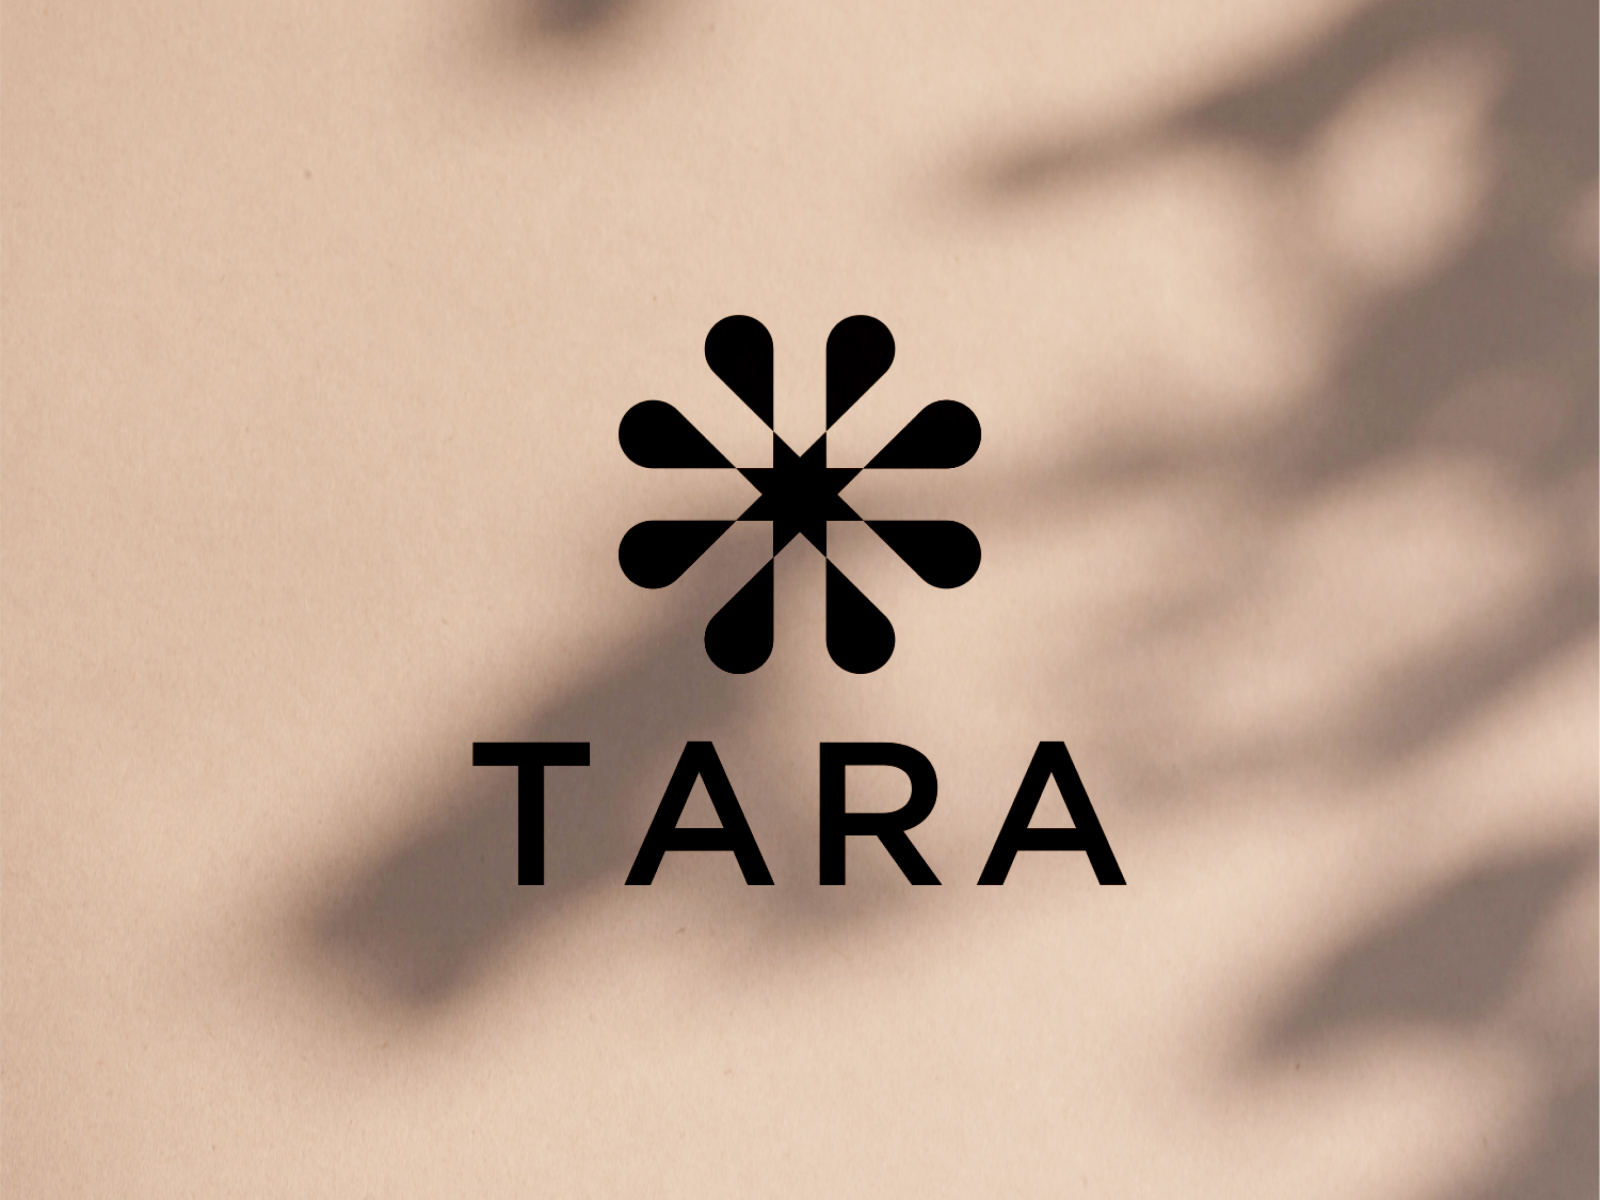 Tara Logo | Free Name Design Tool from Flaming Text